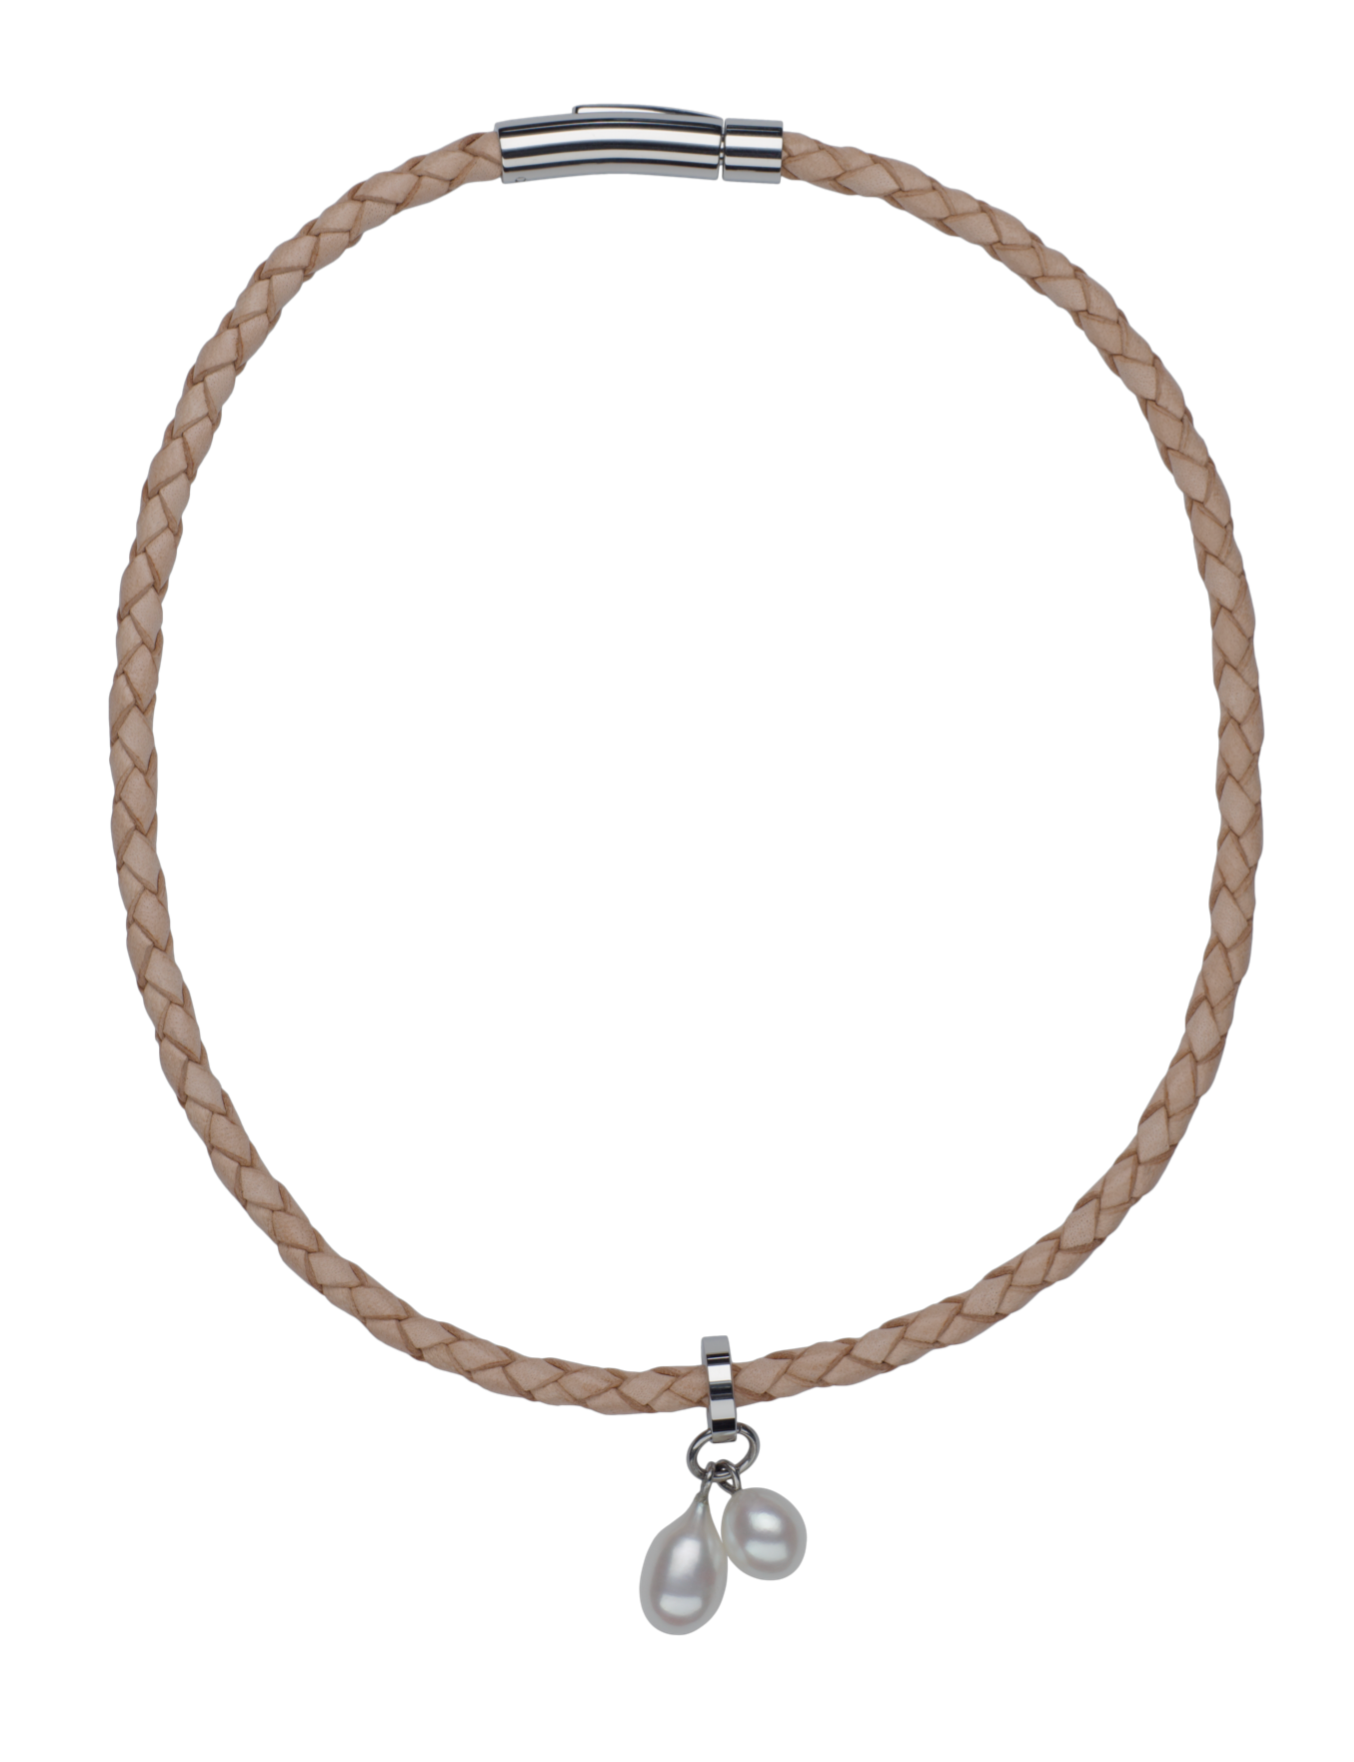 Teton Mountaineering Braided Bracelet/Choker Necklace Pearls by Shari